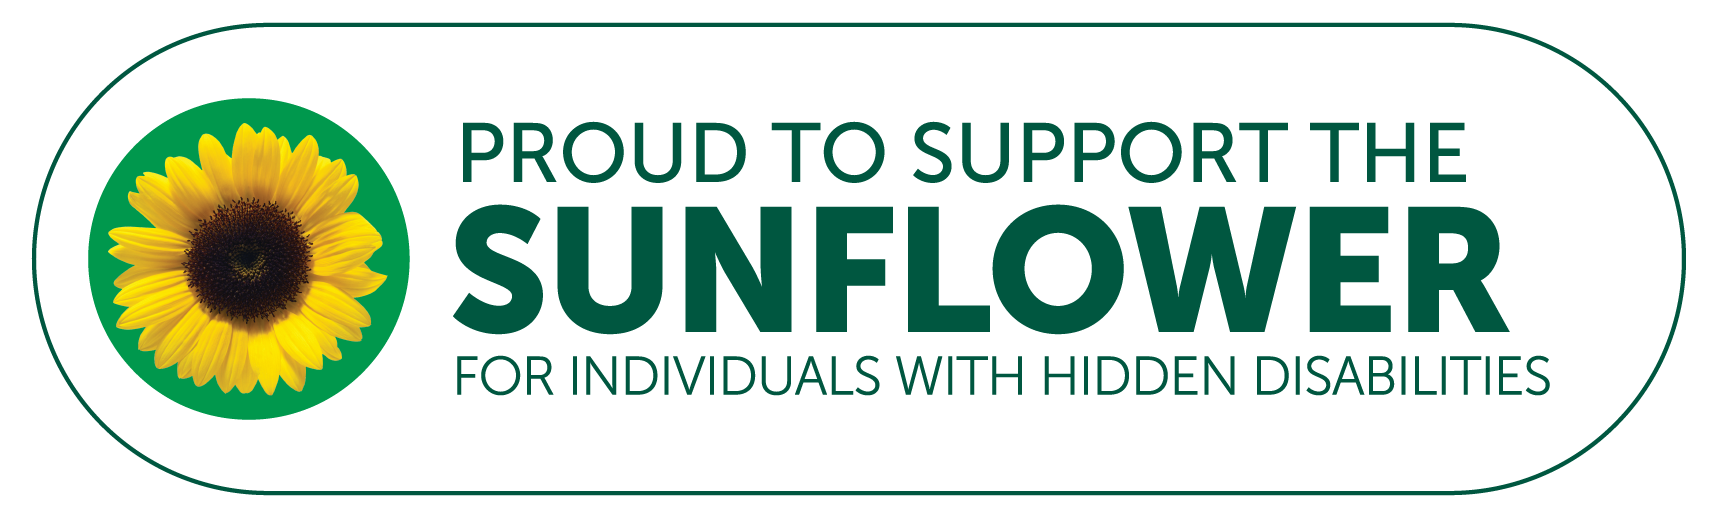 Hidden Disabilities Sunflower logo, proud to support the sunflower for individuals with hidden disabilities.